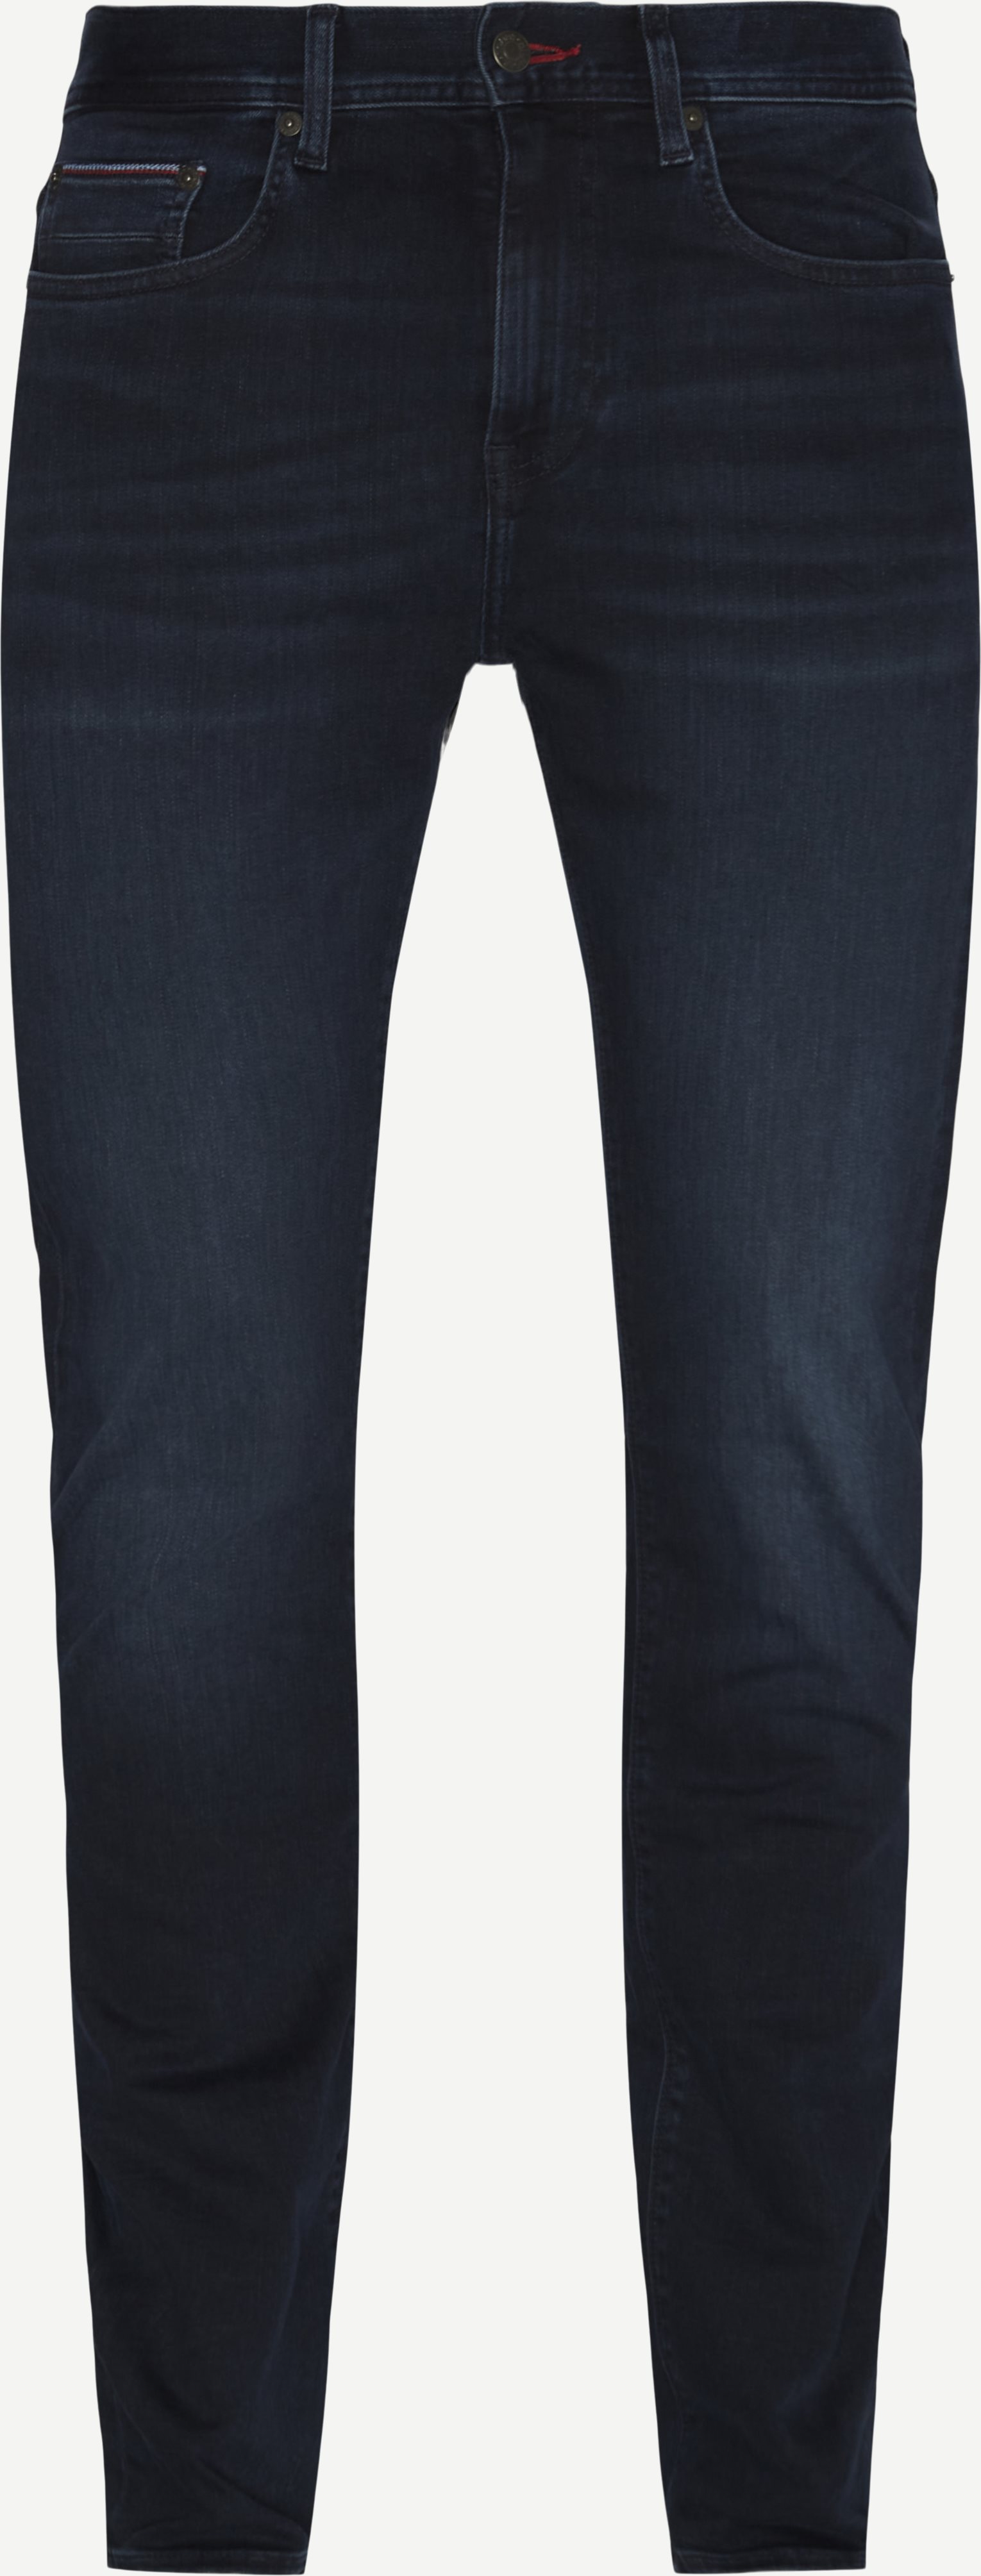 15593 Bleecker jeans - Jeans - Slim fit - Denim